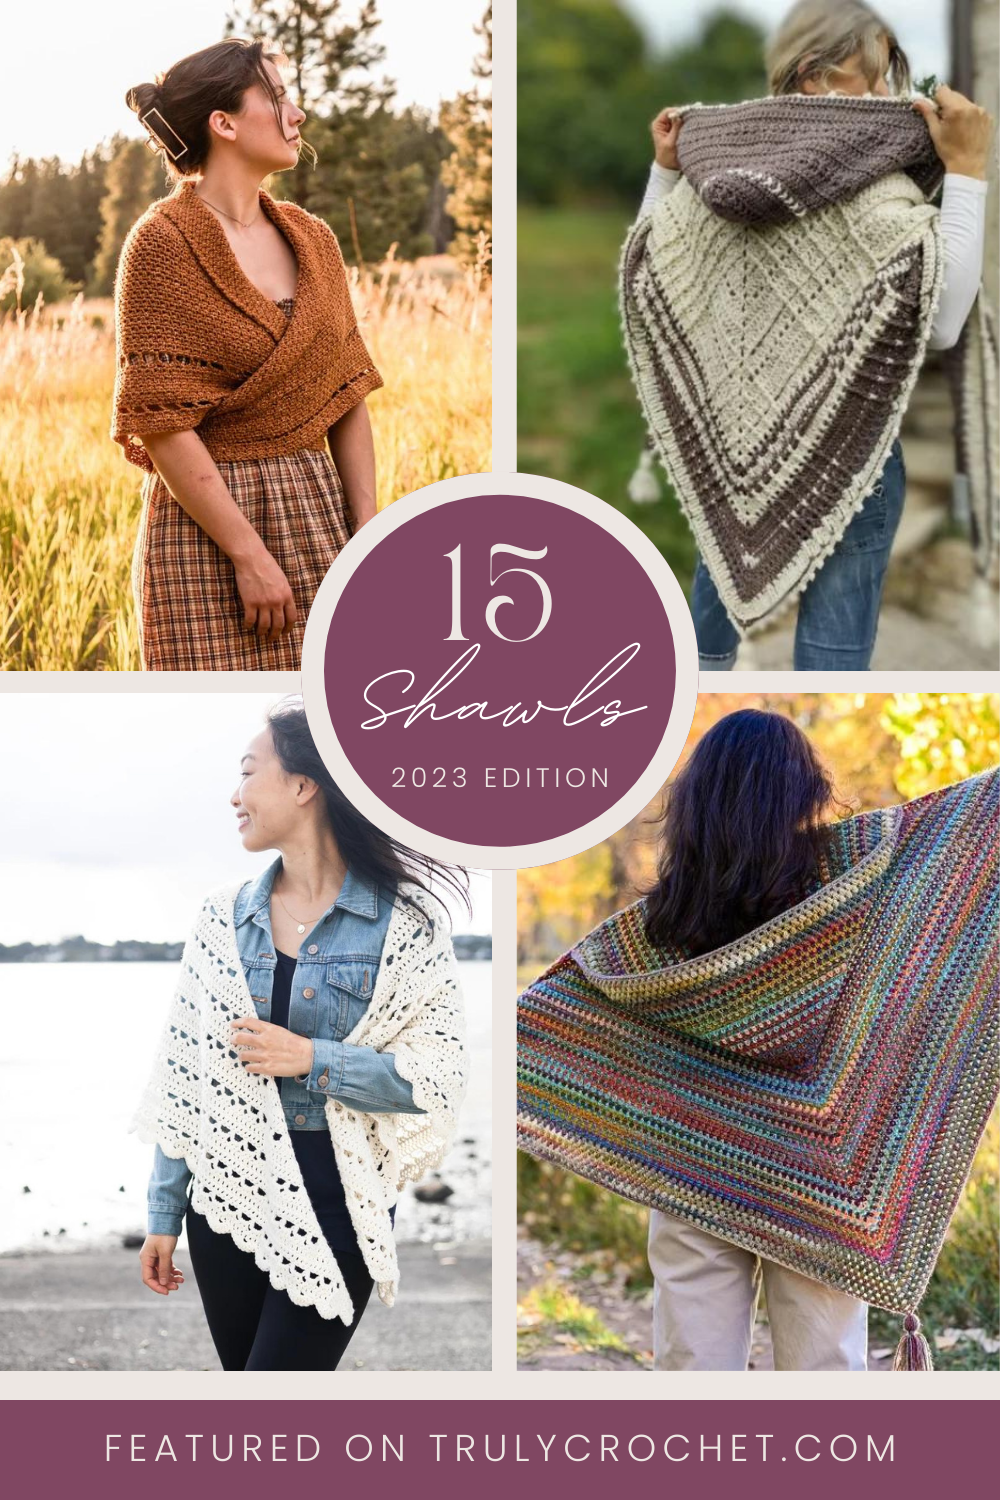 200 Finger weight yarn ideas in 2024  crochet shawl, crochet scarves,  crochet shawls and wraps